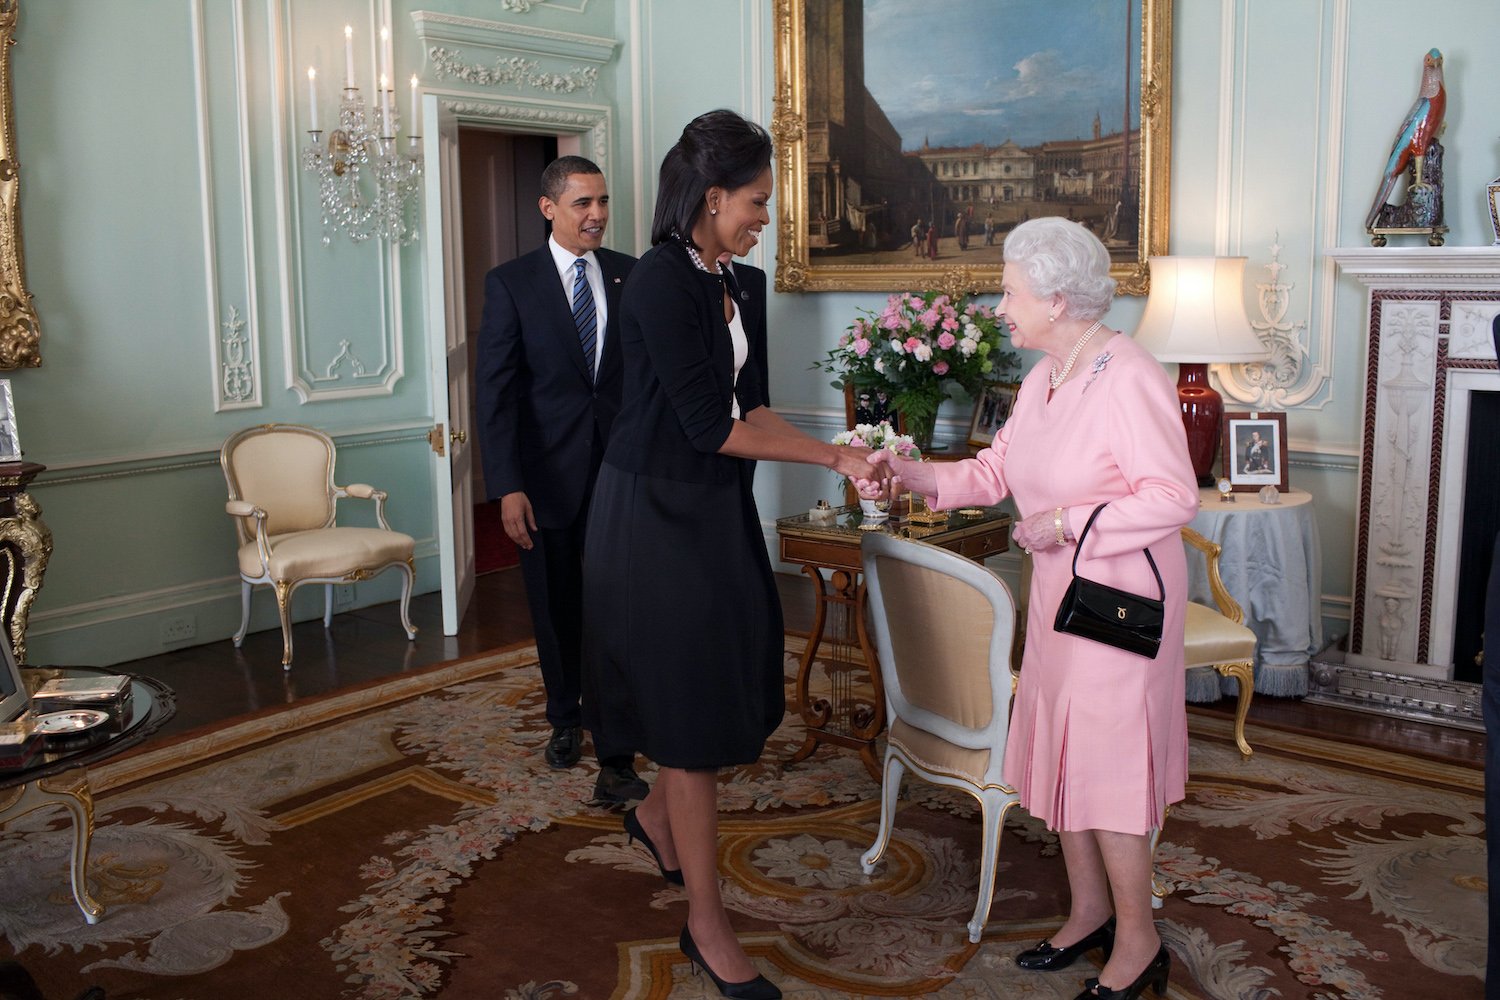 Barack Obama, Michelle Obama, and Queen Elizabeth II in 2009